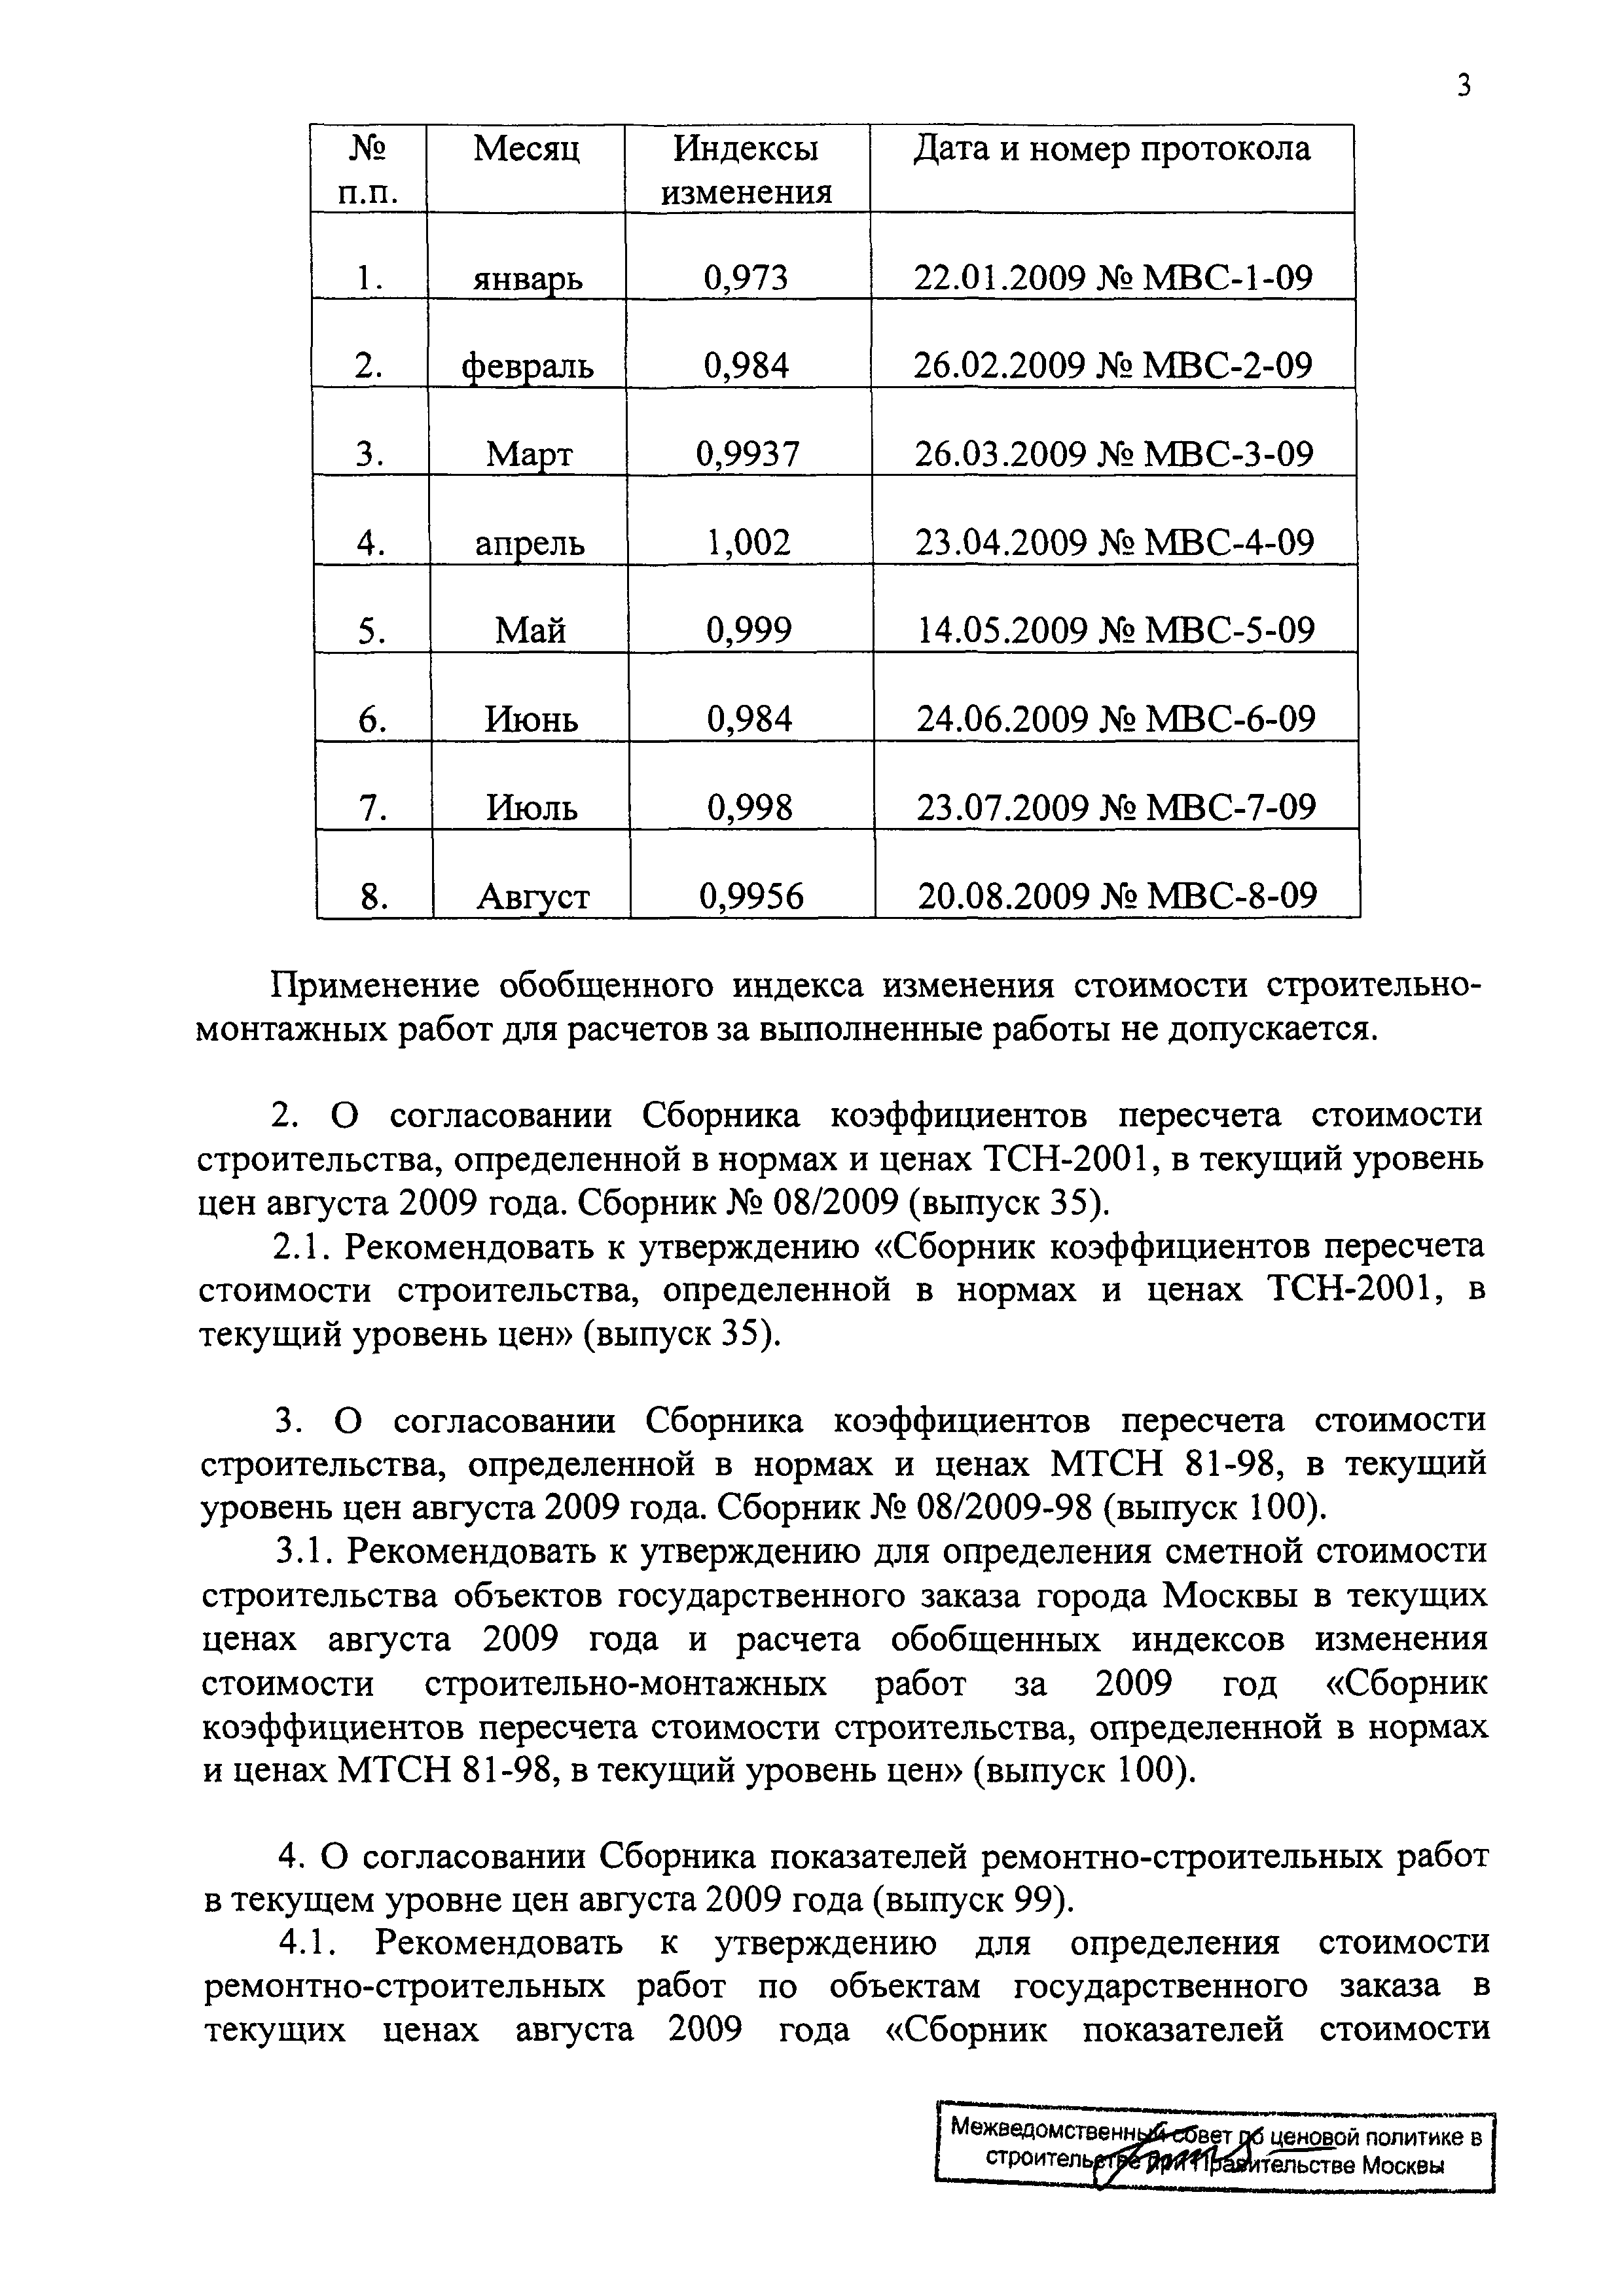 Протокол МВС-8-09